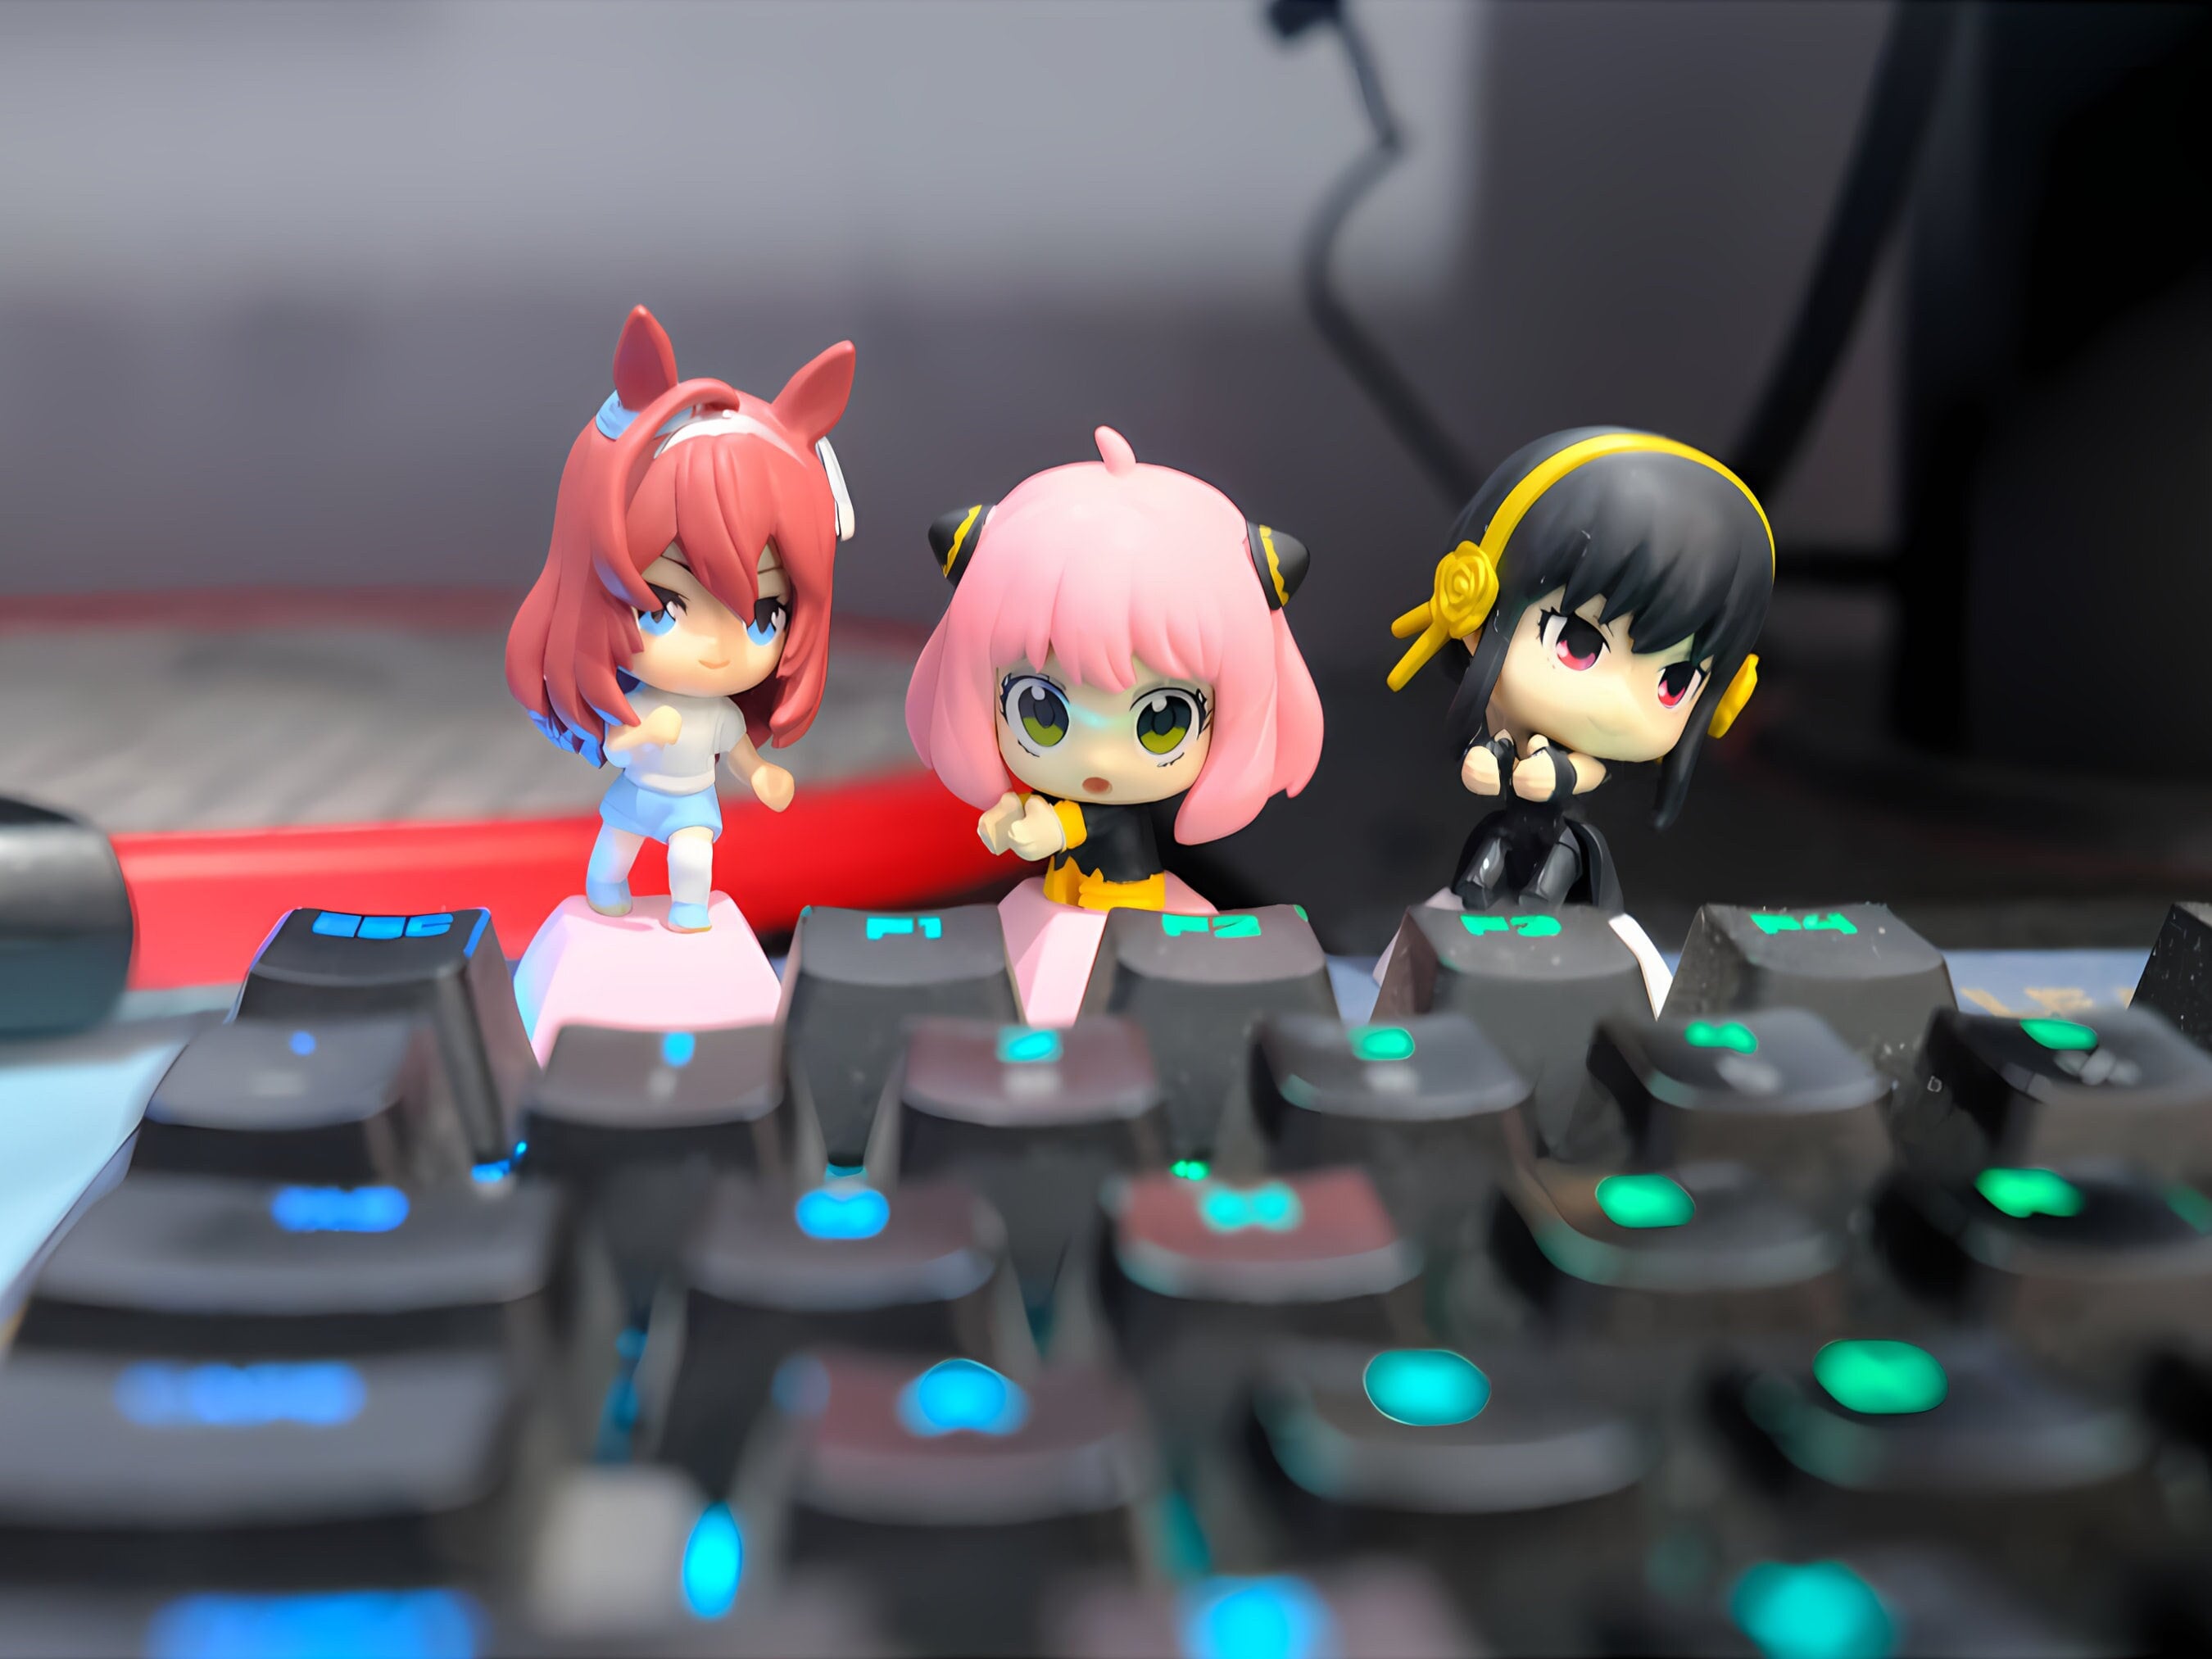 S-py X Fami.ly Keycap, Anime Keycap, Artisan Keycap, Keycap for MX Cherry Switches Mechanical Keyboard, Handmade Gift